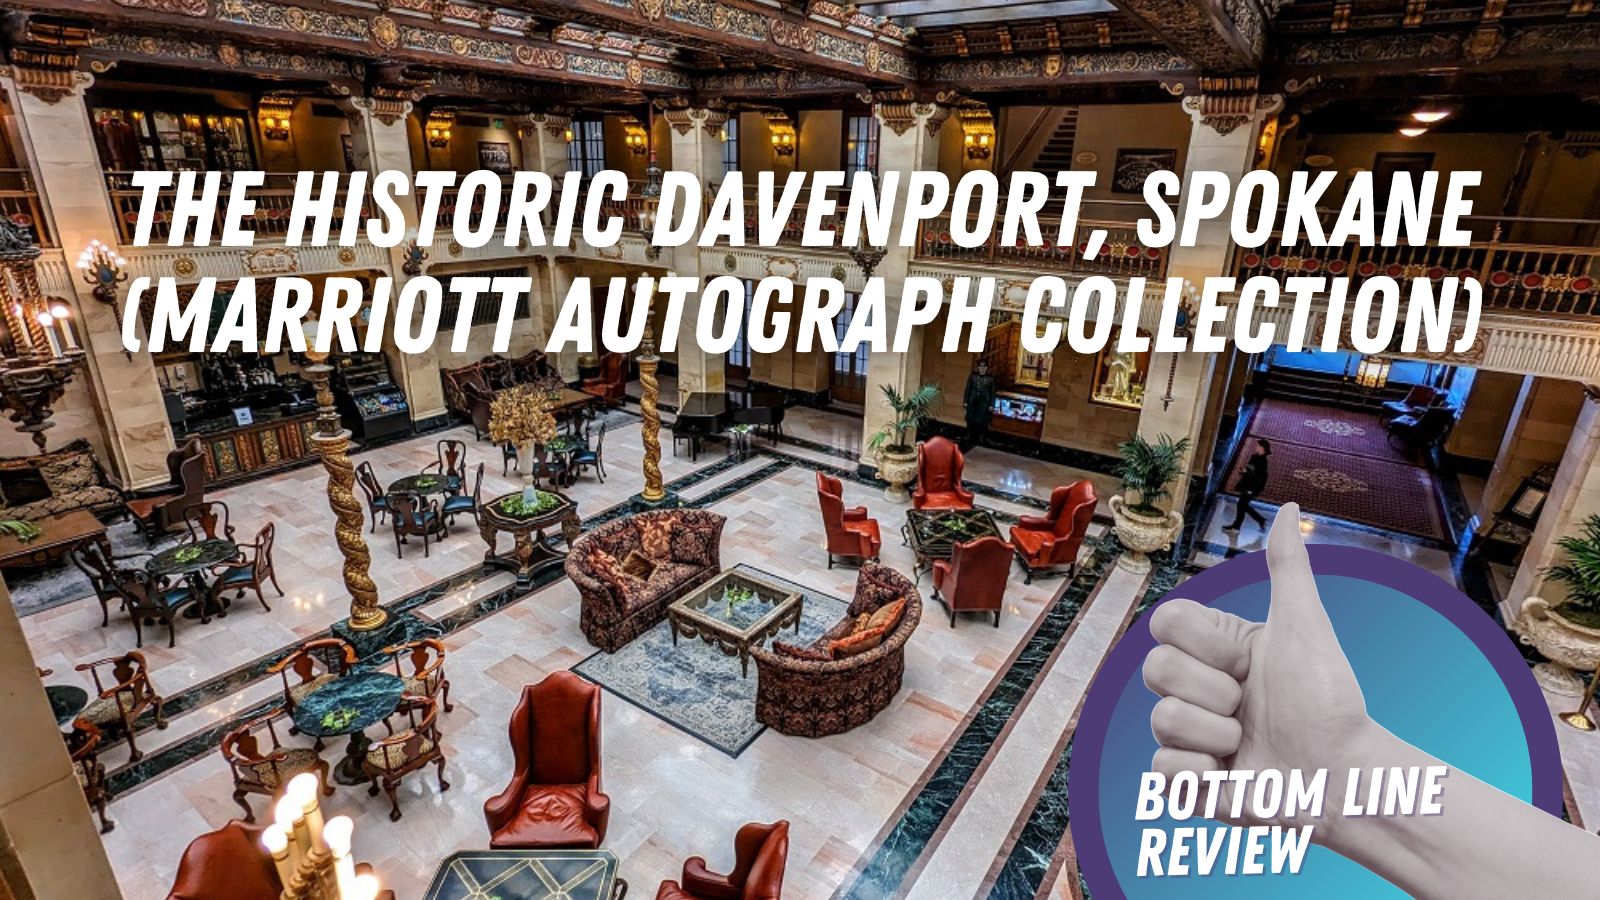 Hotel Review The Historic Davenport, Spokane (Marriott Autograph Collection)